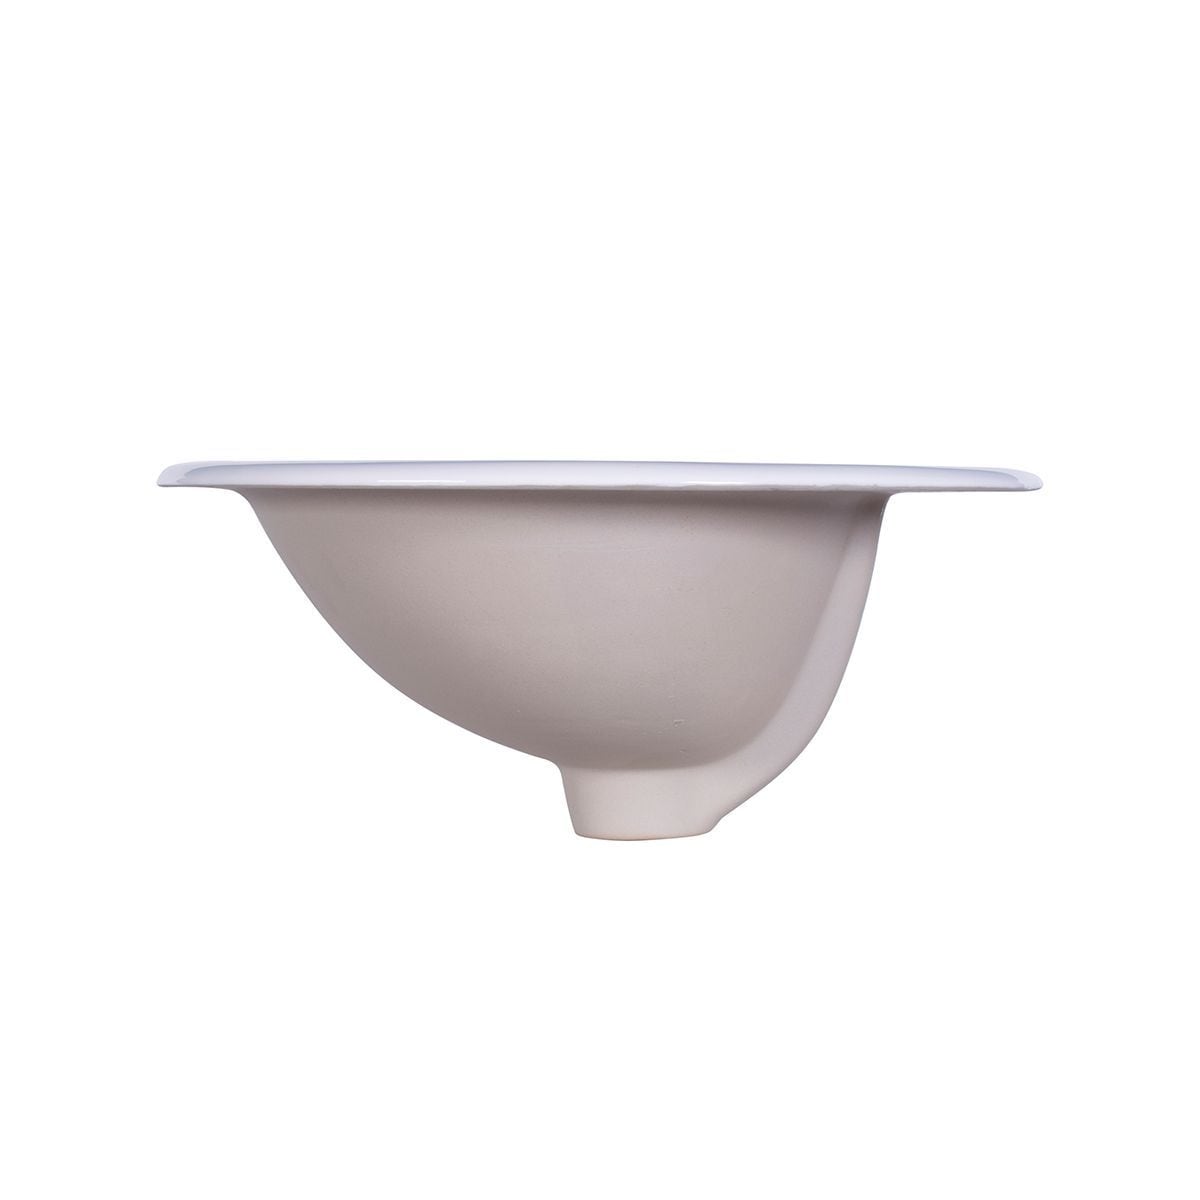 DAX Ceramic Single Bowl Top Mount Bathroom Basin, White